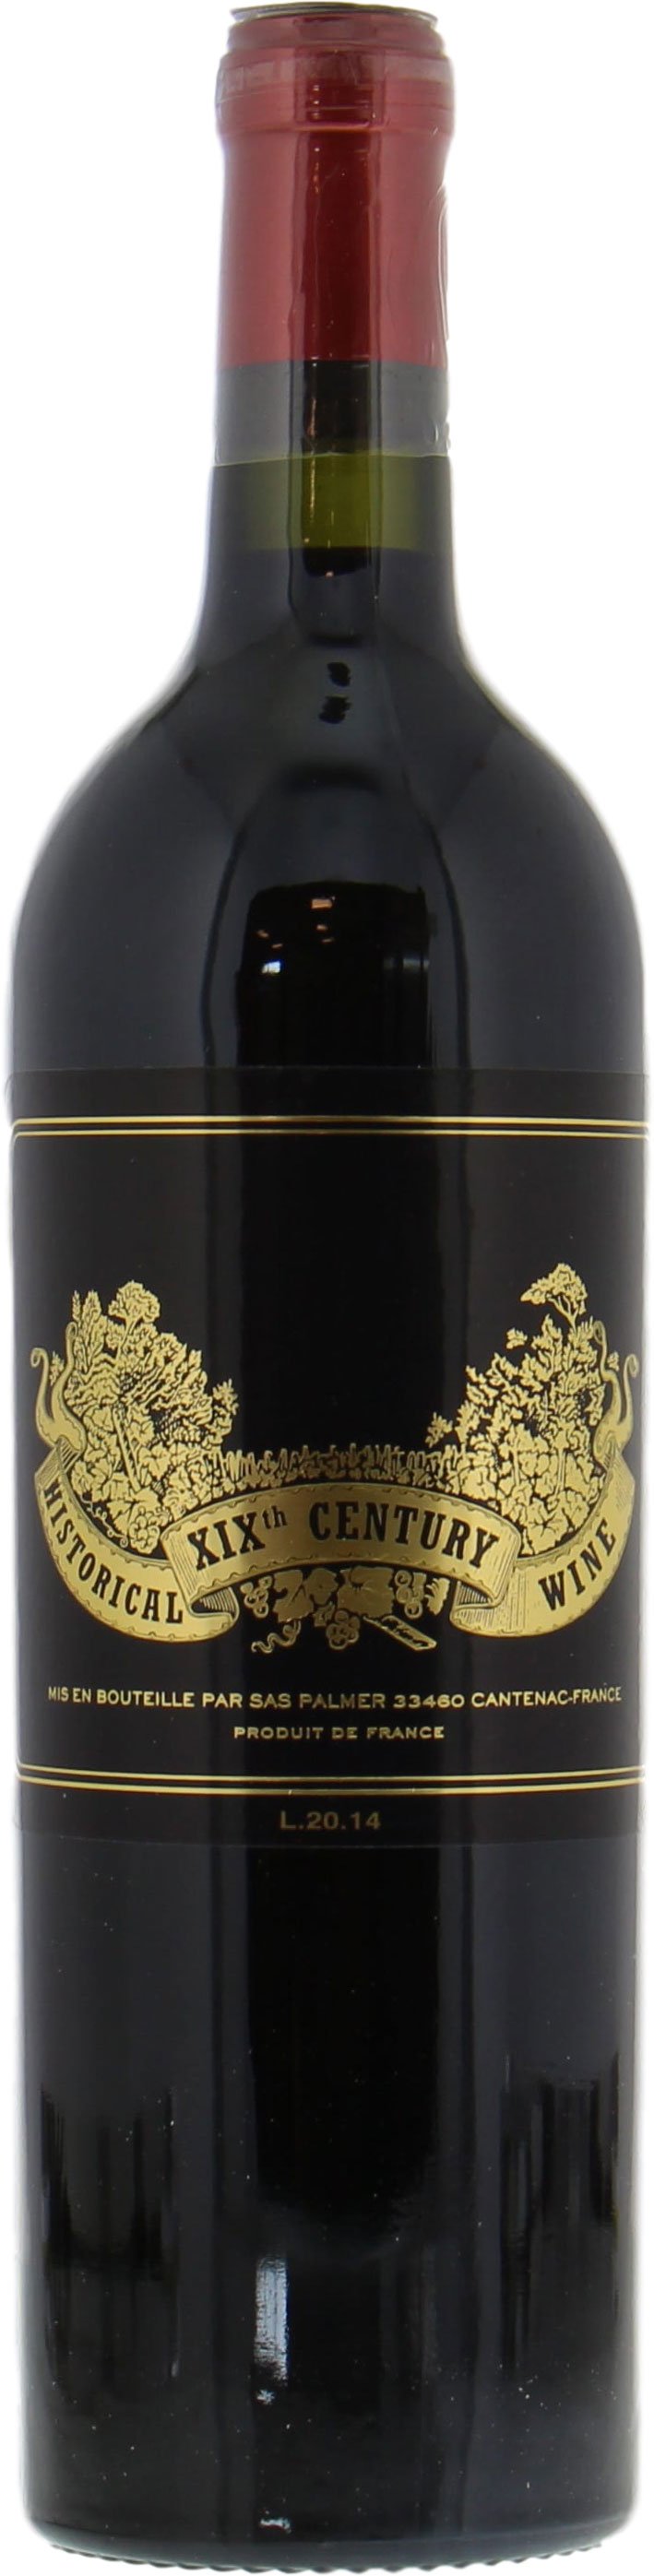 Chateau Palmer - Palmer Historical XIXth Century Wine L.20.14 2014